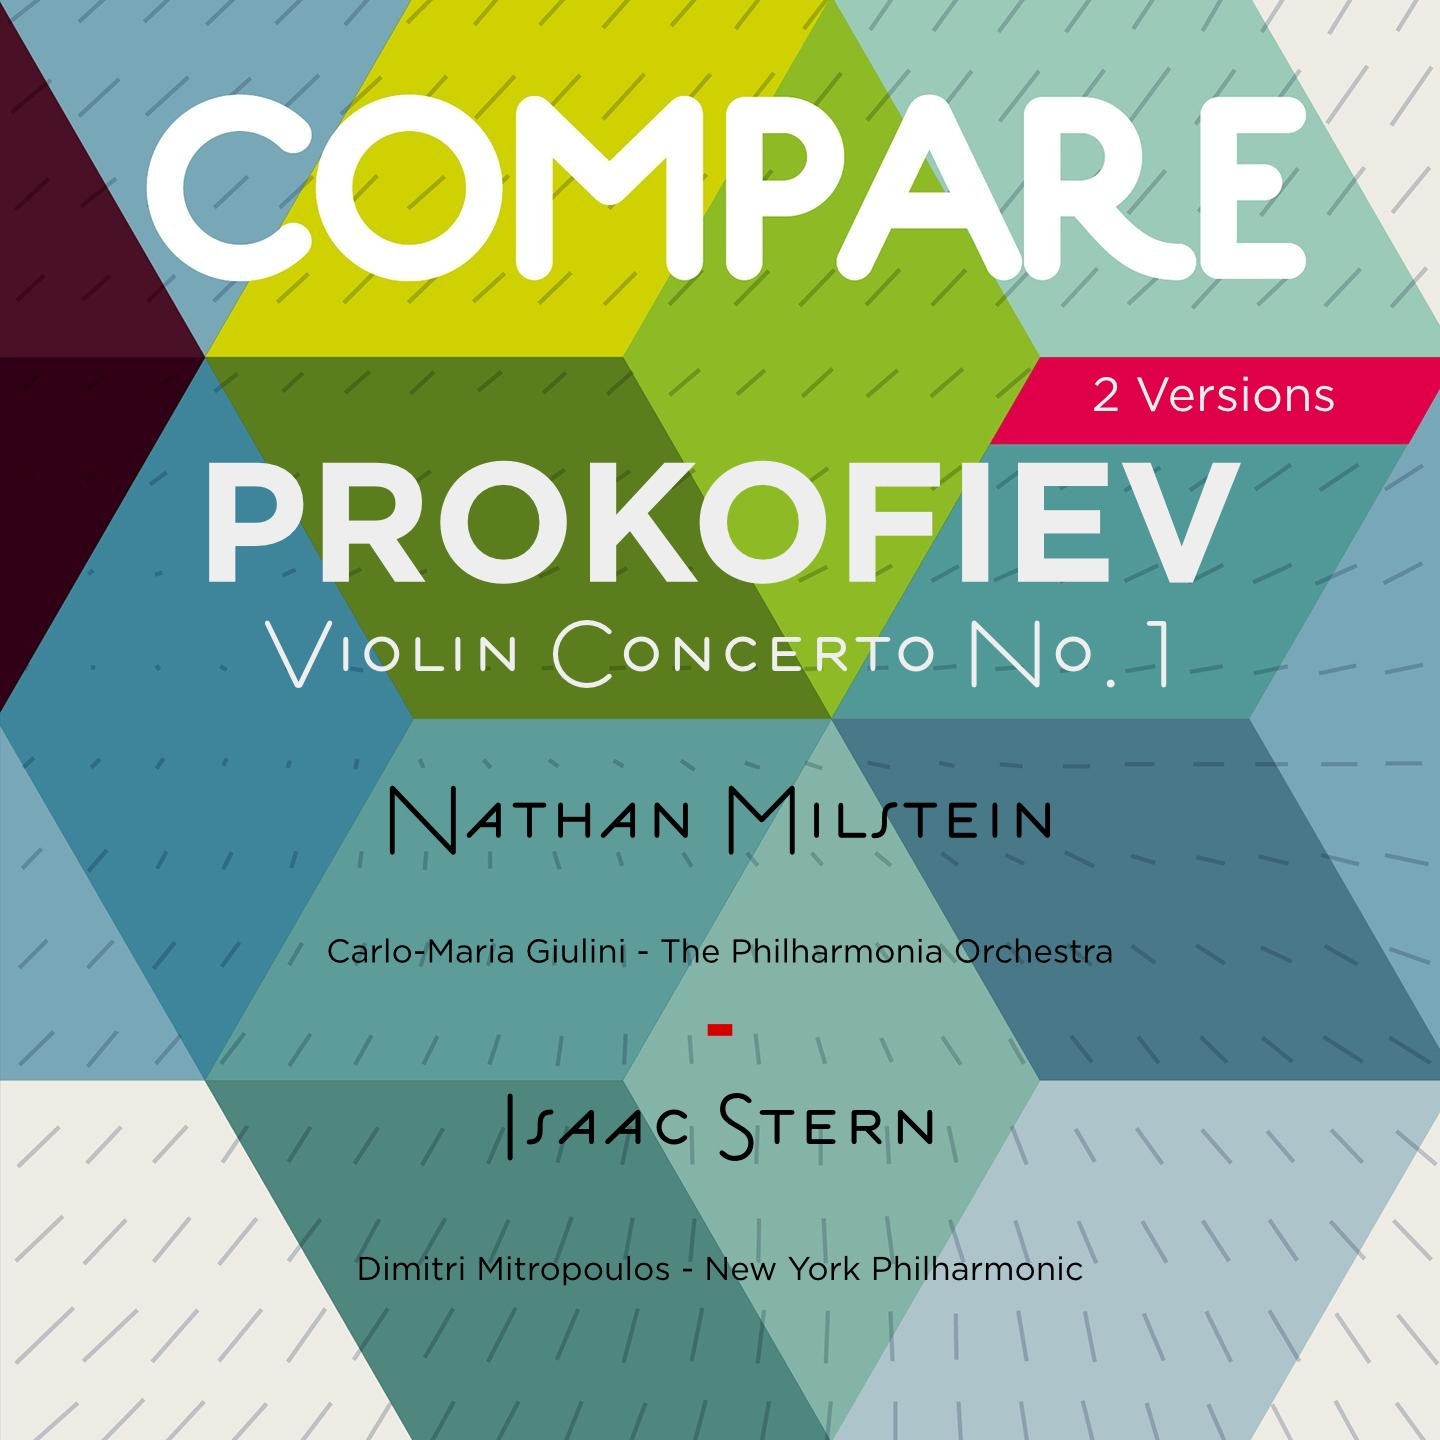 Prokofiev: Violin Concerto No. 1, Nathan Milstein vs. Isaac Stern